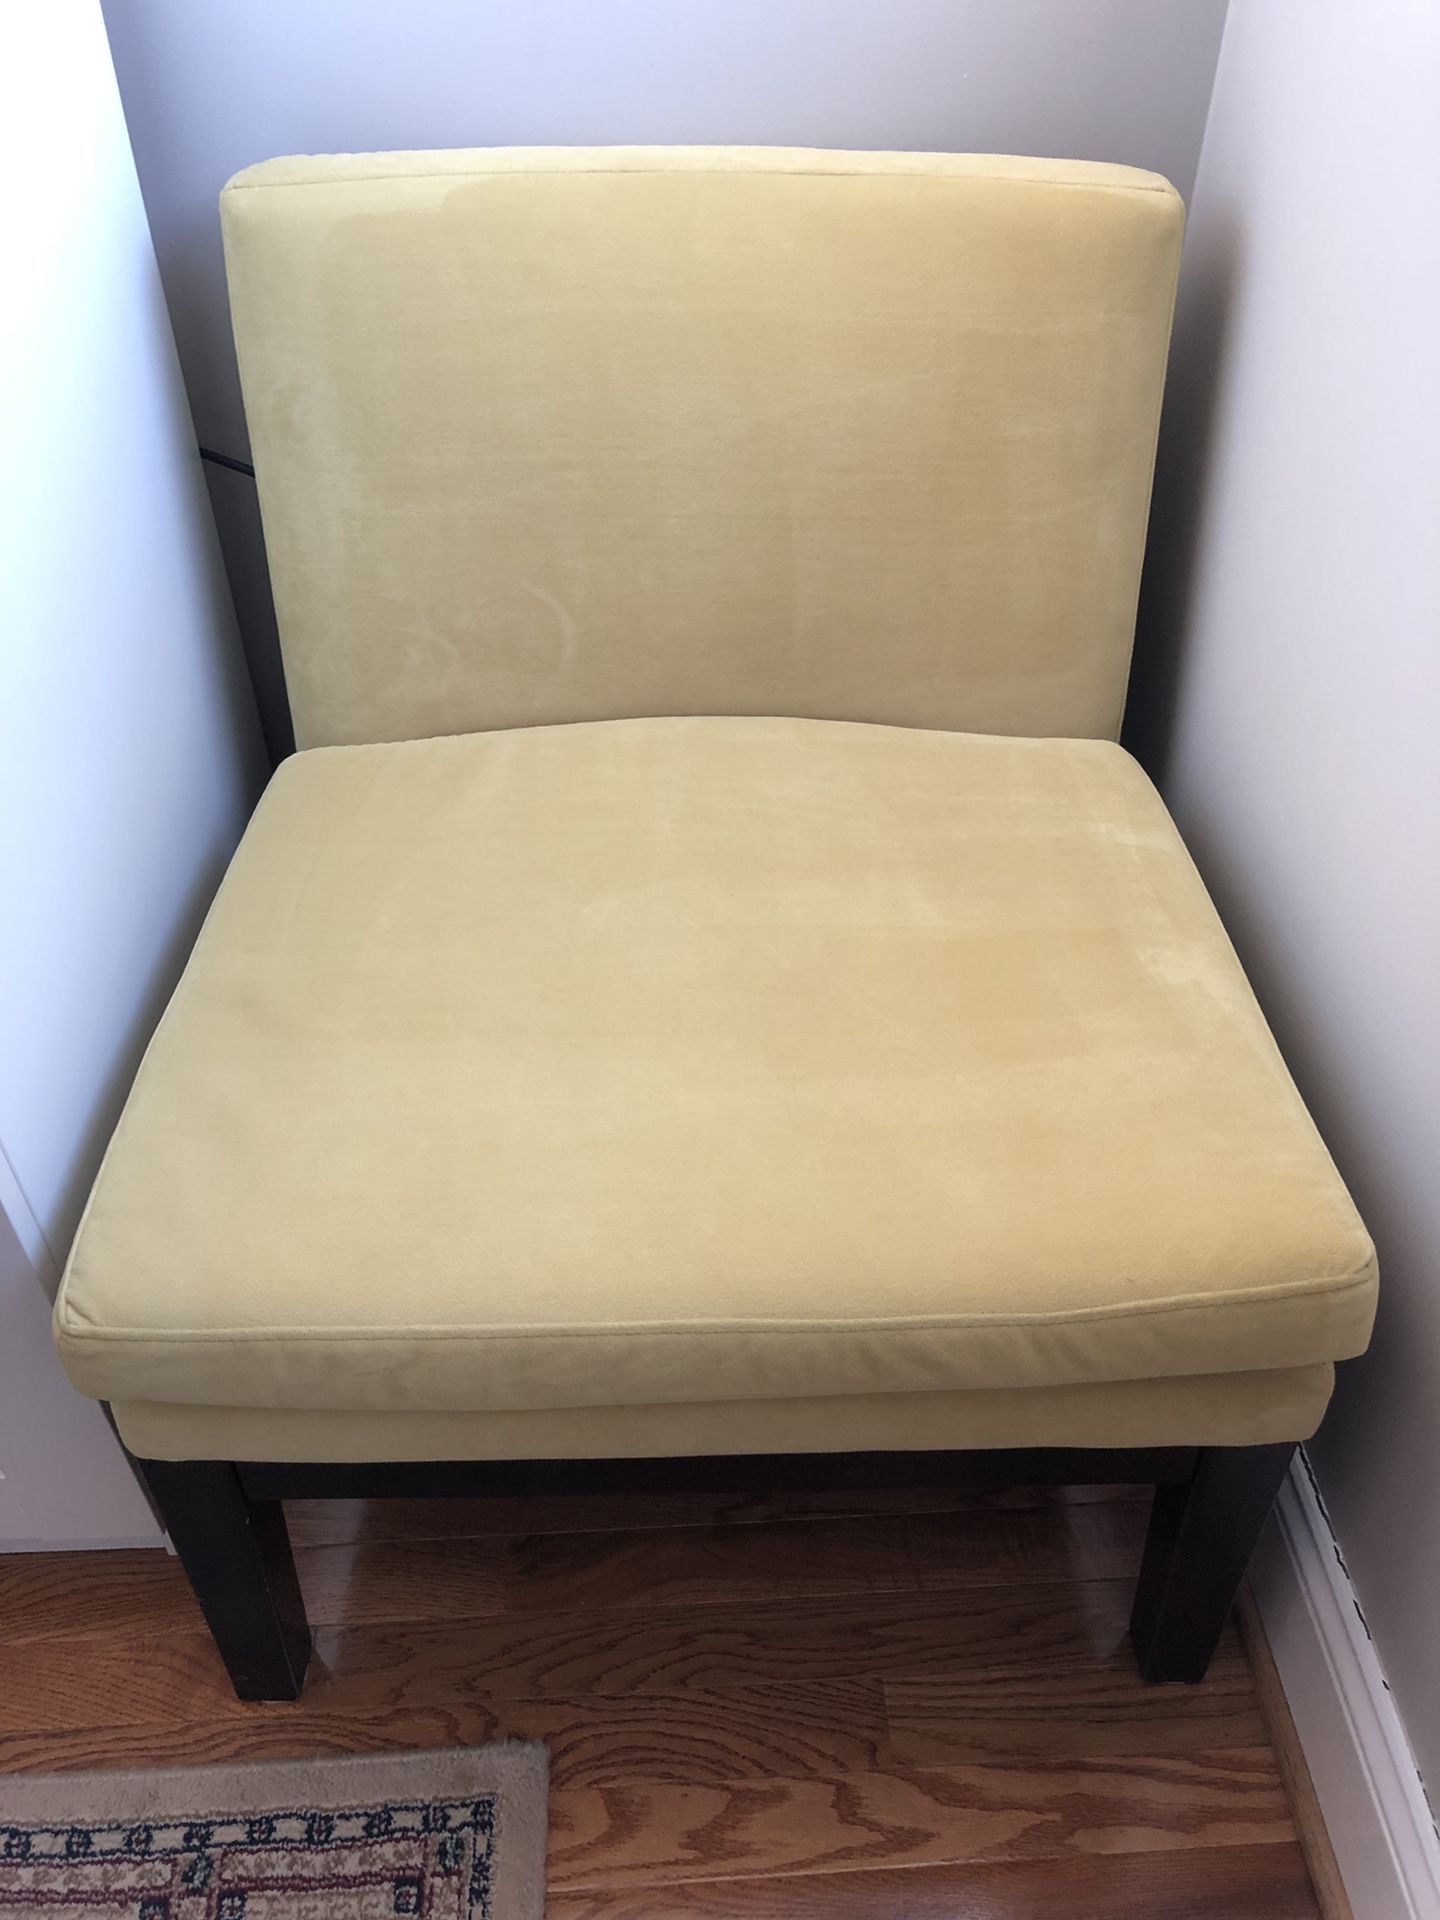 West Elm - mid-century modern chair